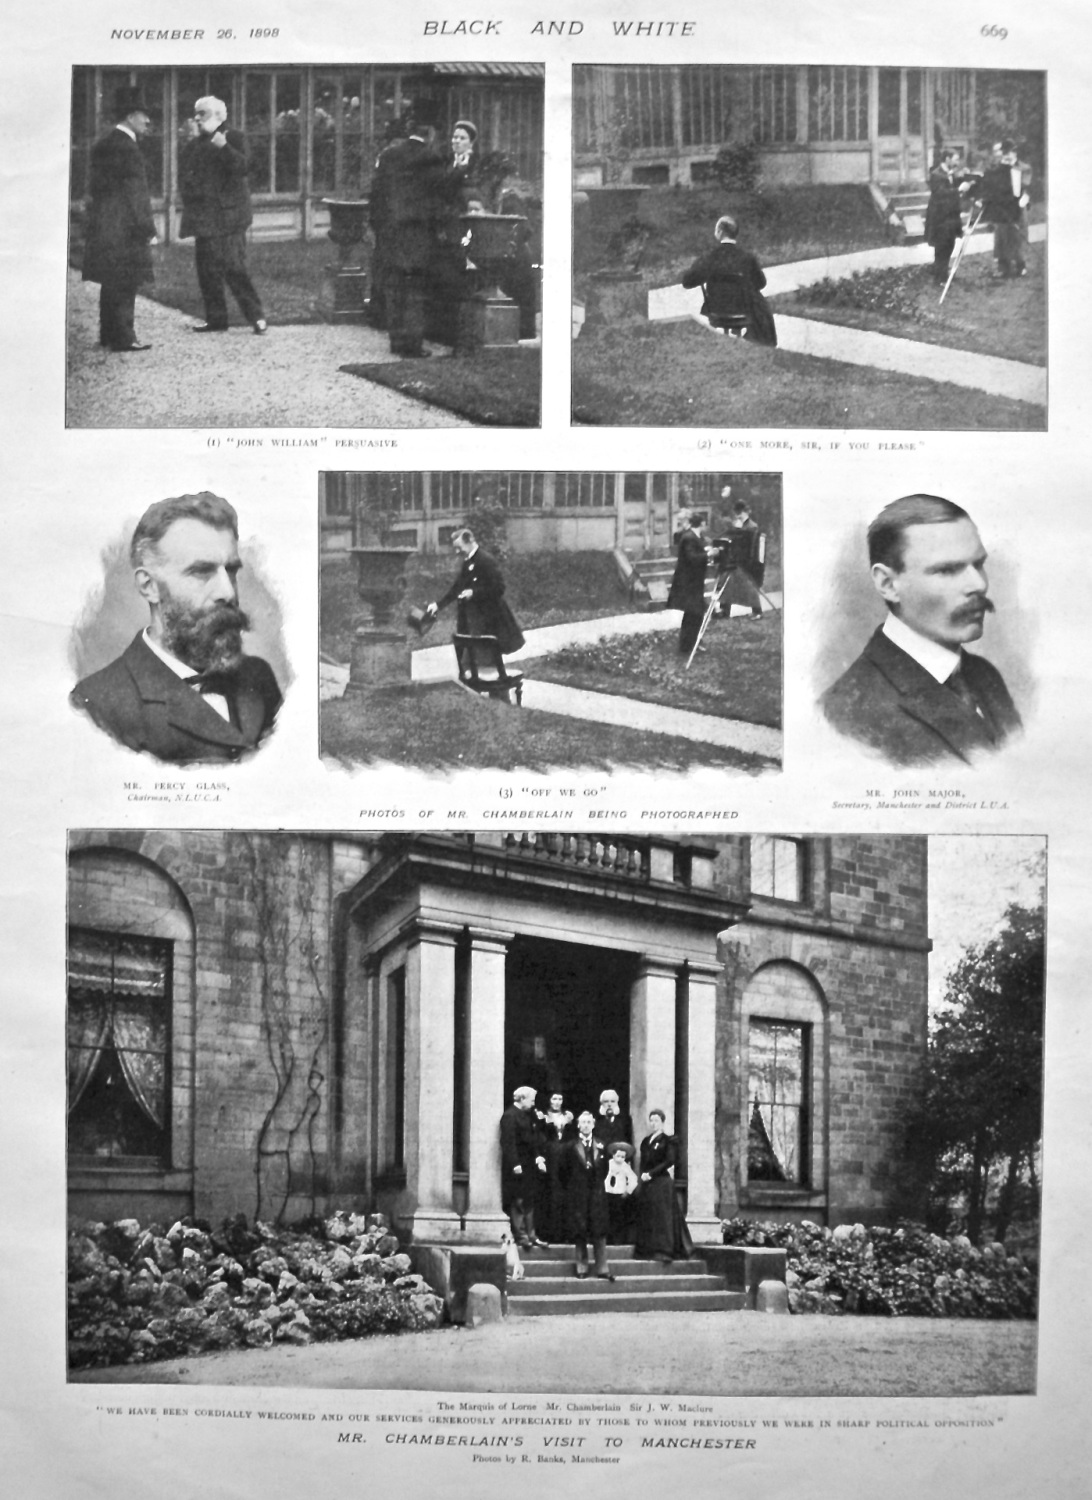 Mr. Chamberlain's visit to Manchester. 1898.